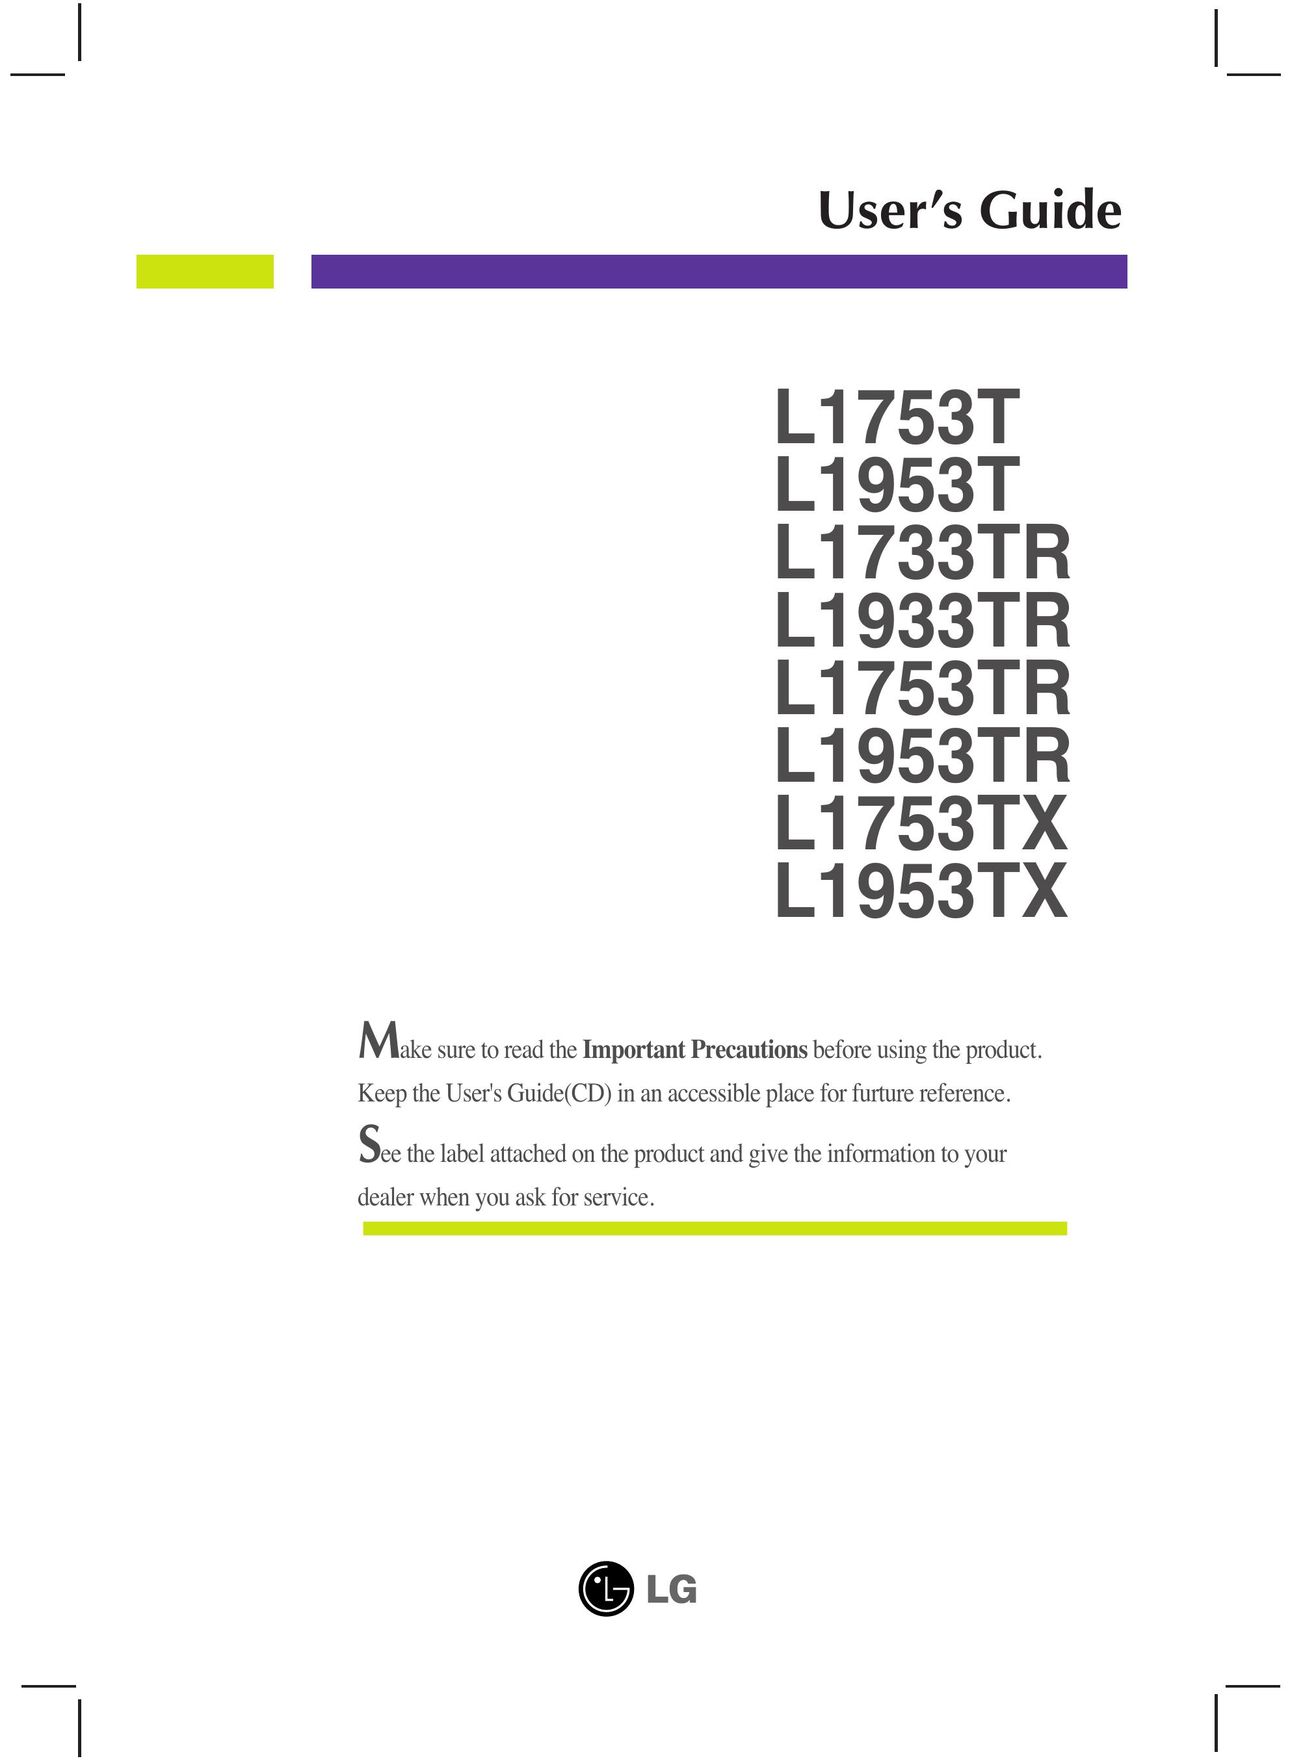 LG Electronics L1933TR CD Player User Manual